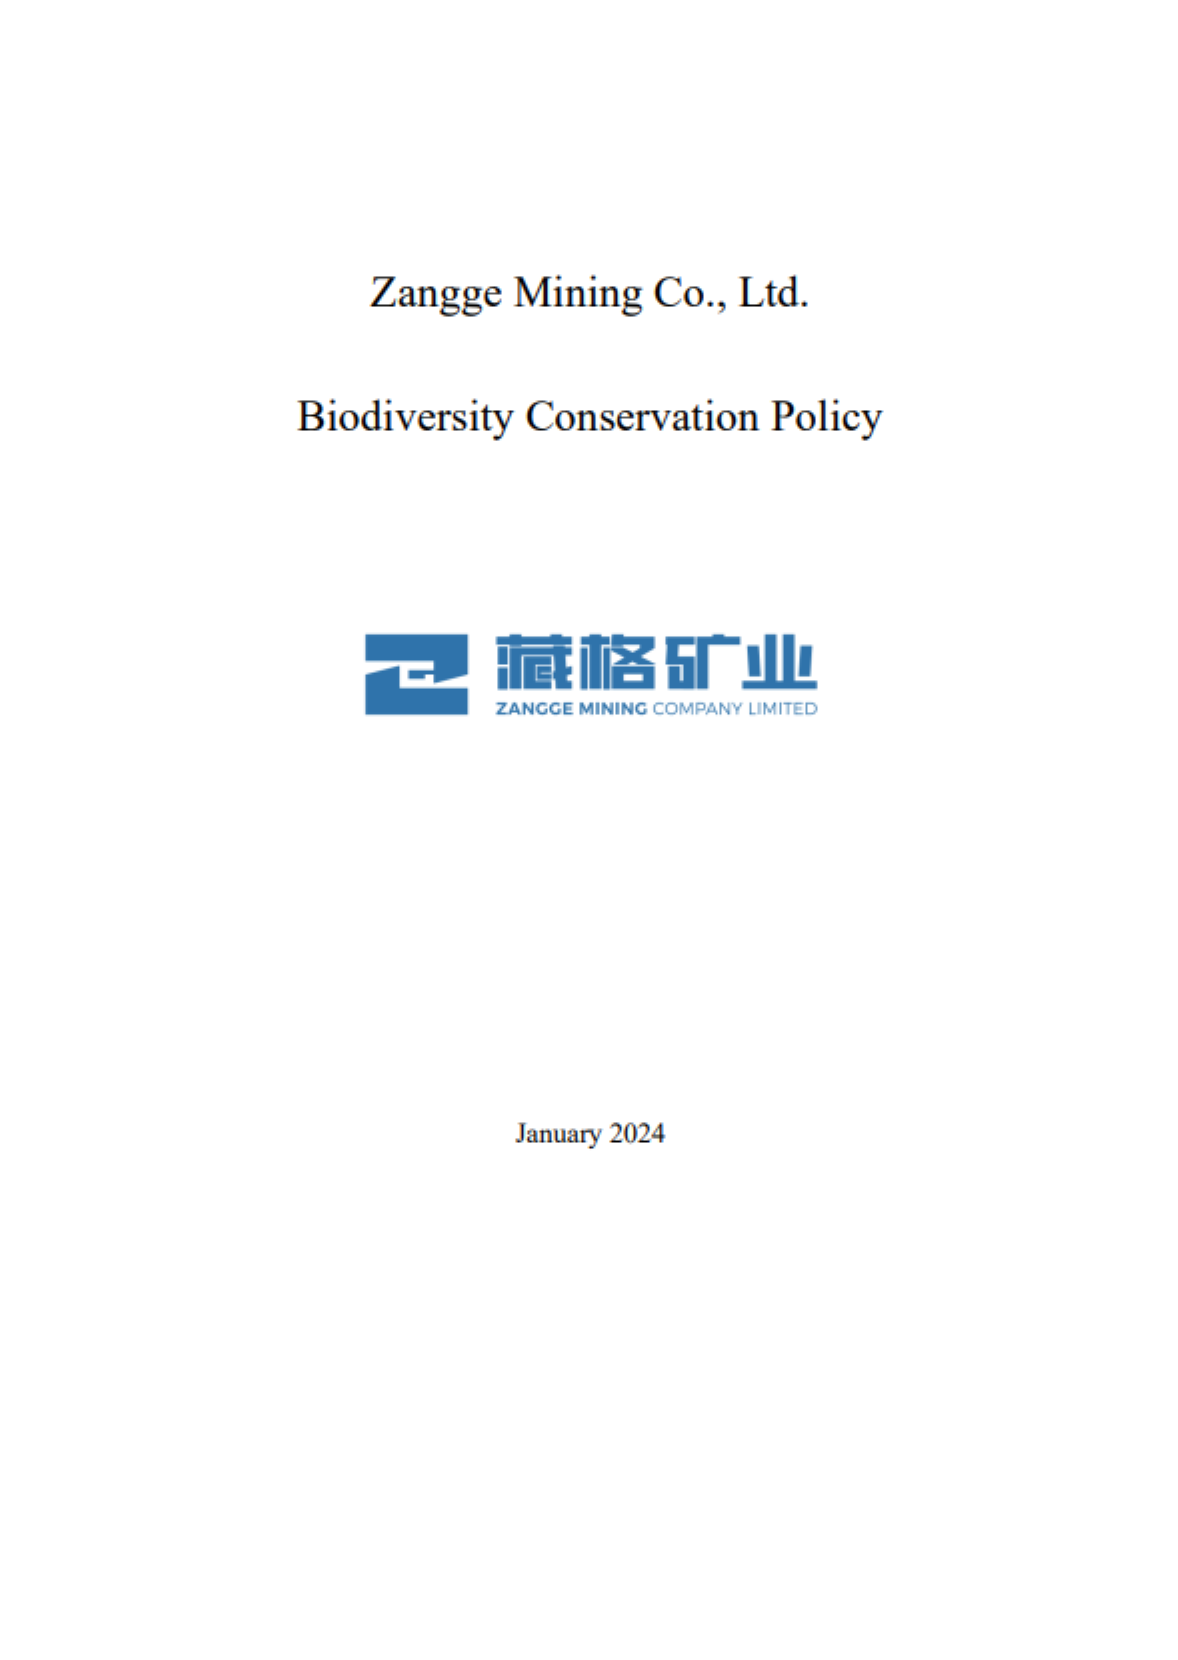 Biodiversity Conservation Policy of Zangge Mining Co., Ltd.